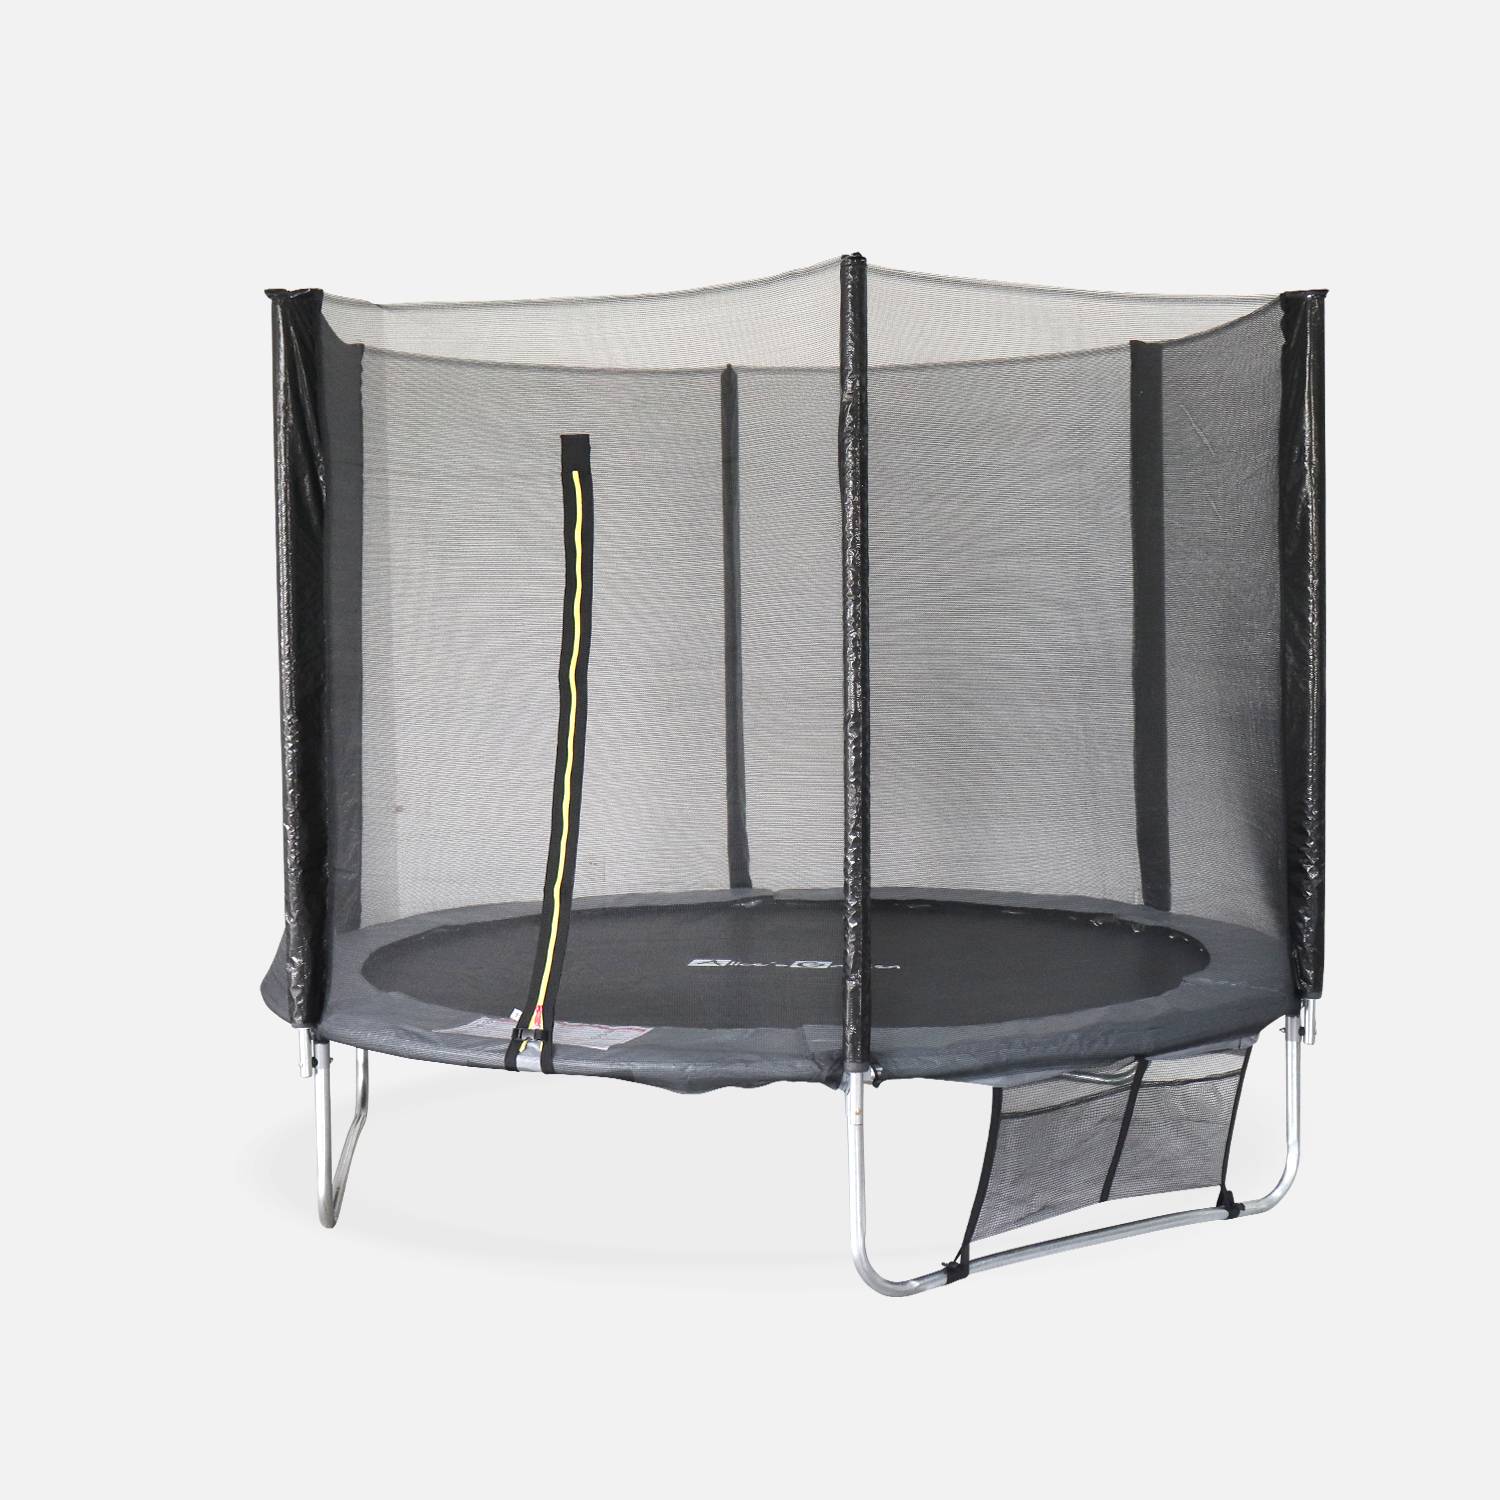 Trampoline 250 cm, grey, with safety net, tarpaulin, shoe net, anchoring kit Photo2